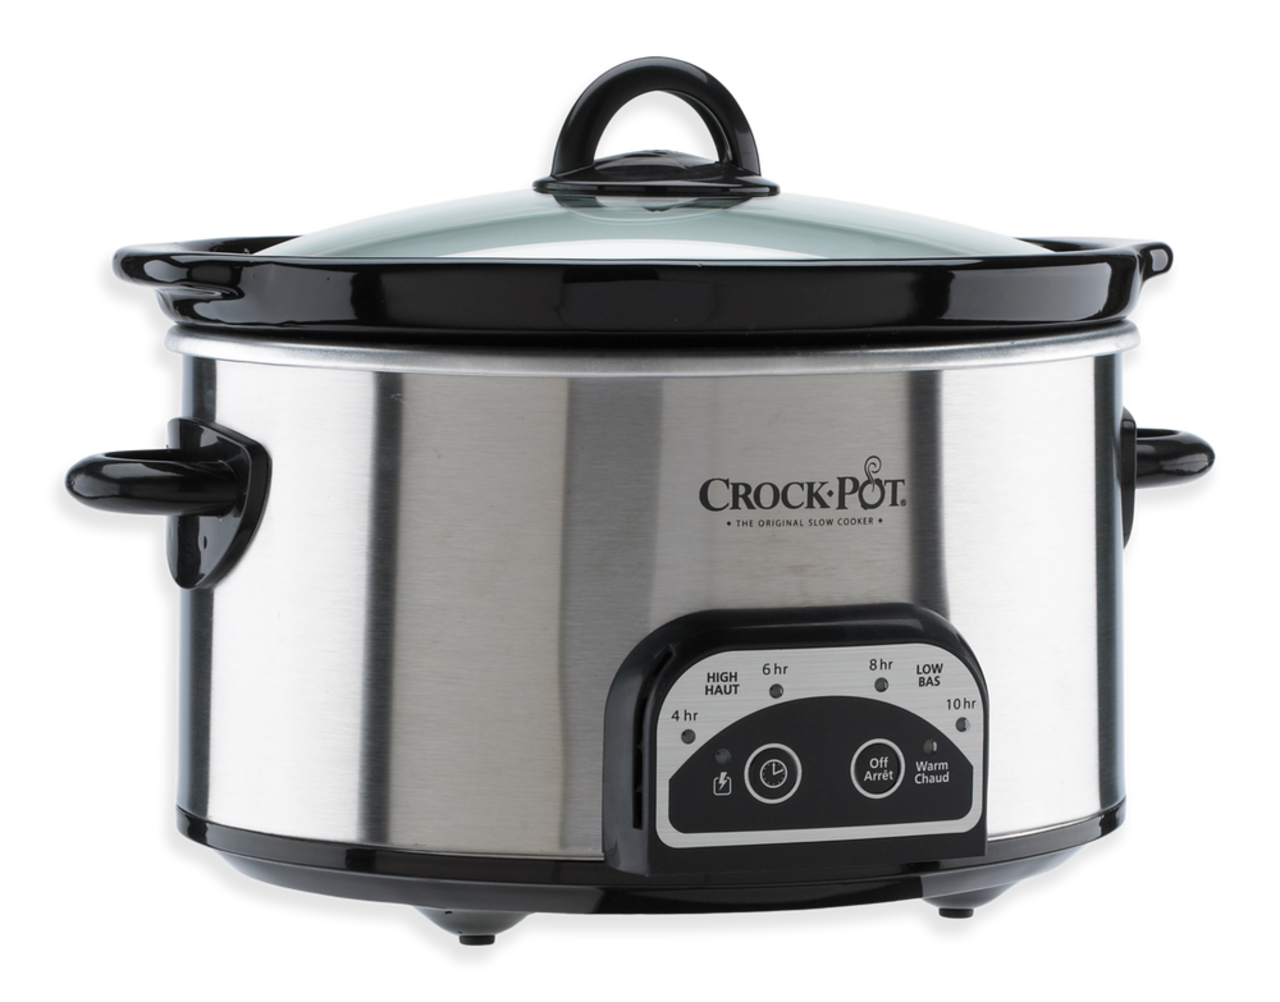 Crock-Pot Digital Programmable Slow Cooker, Stainless Steel, 4